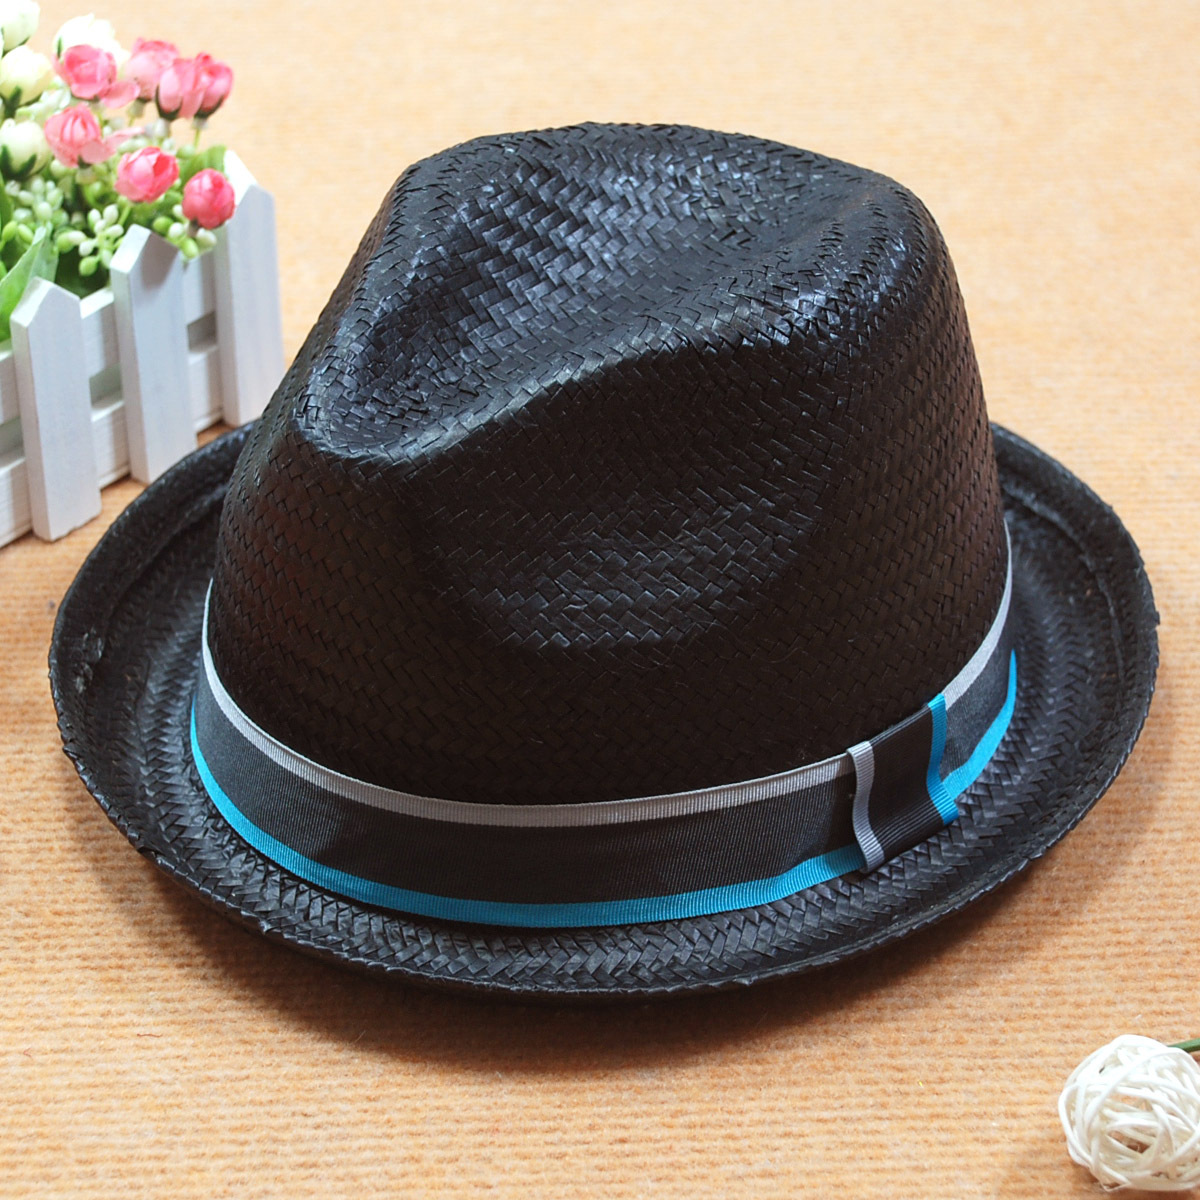 Captale fashion fedoras roll-up hem strawhat casual hat summer hat